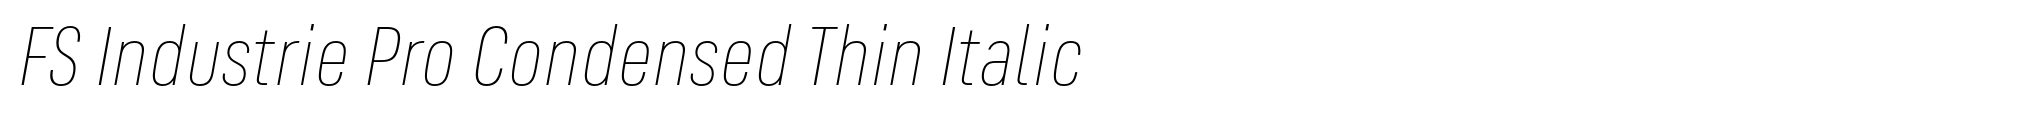 FS Industrie Pro Condensed Thin Italic image